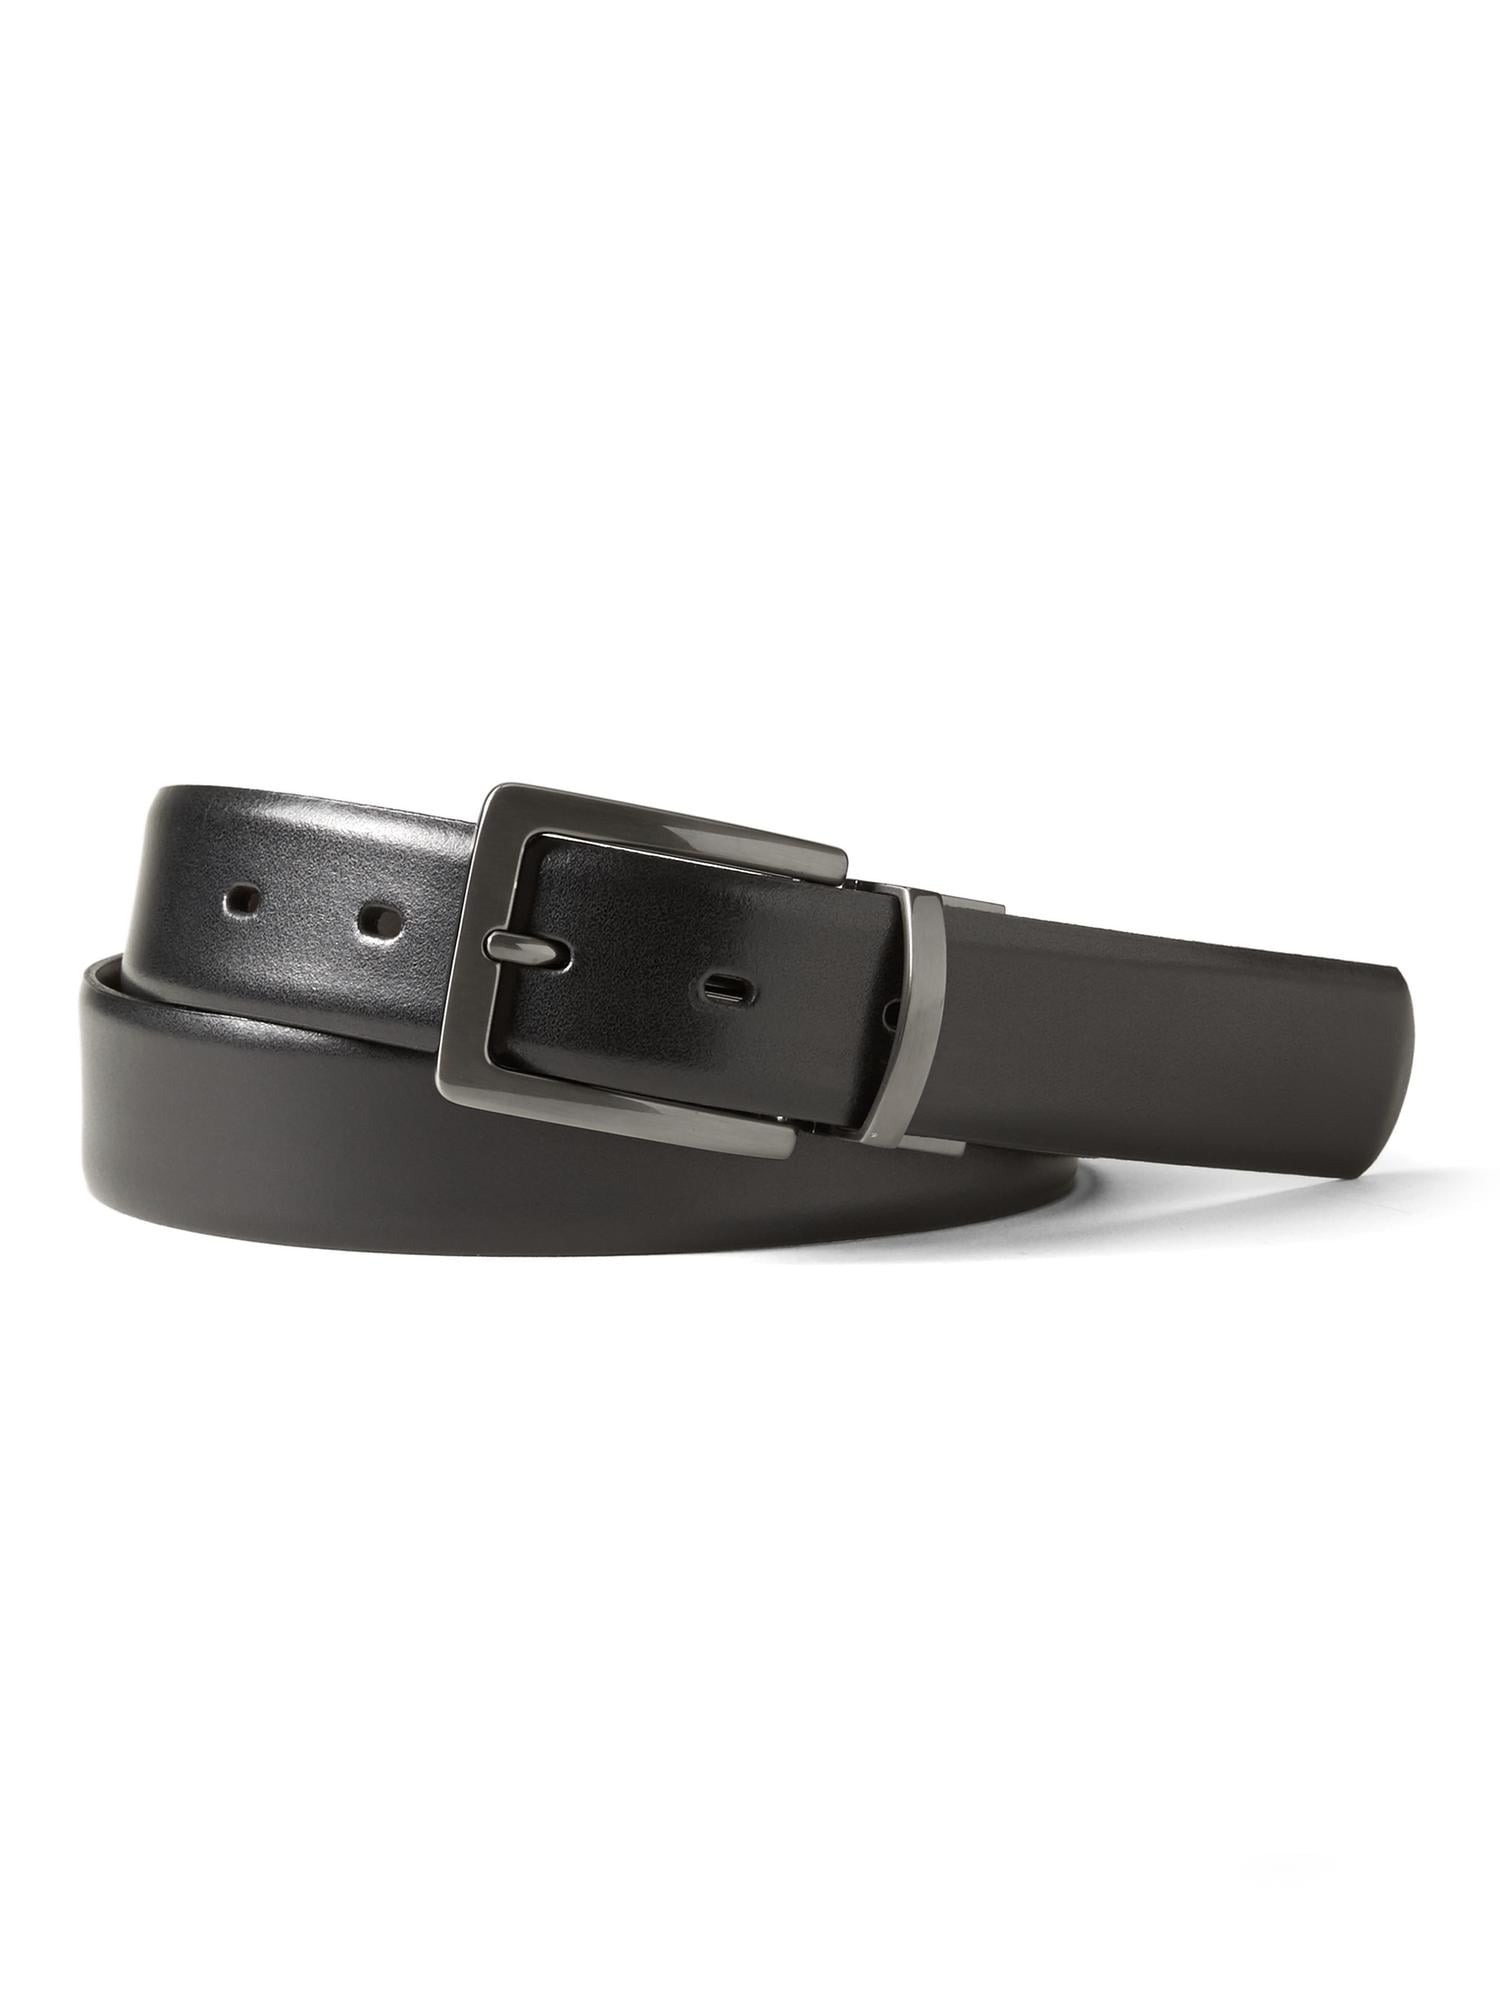 Reversible Italian Leather Belt